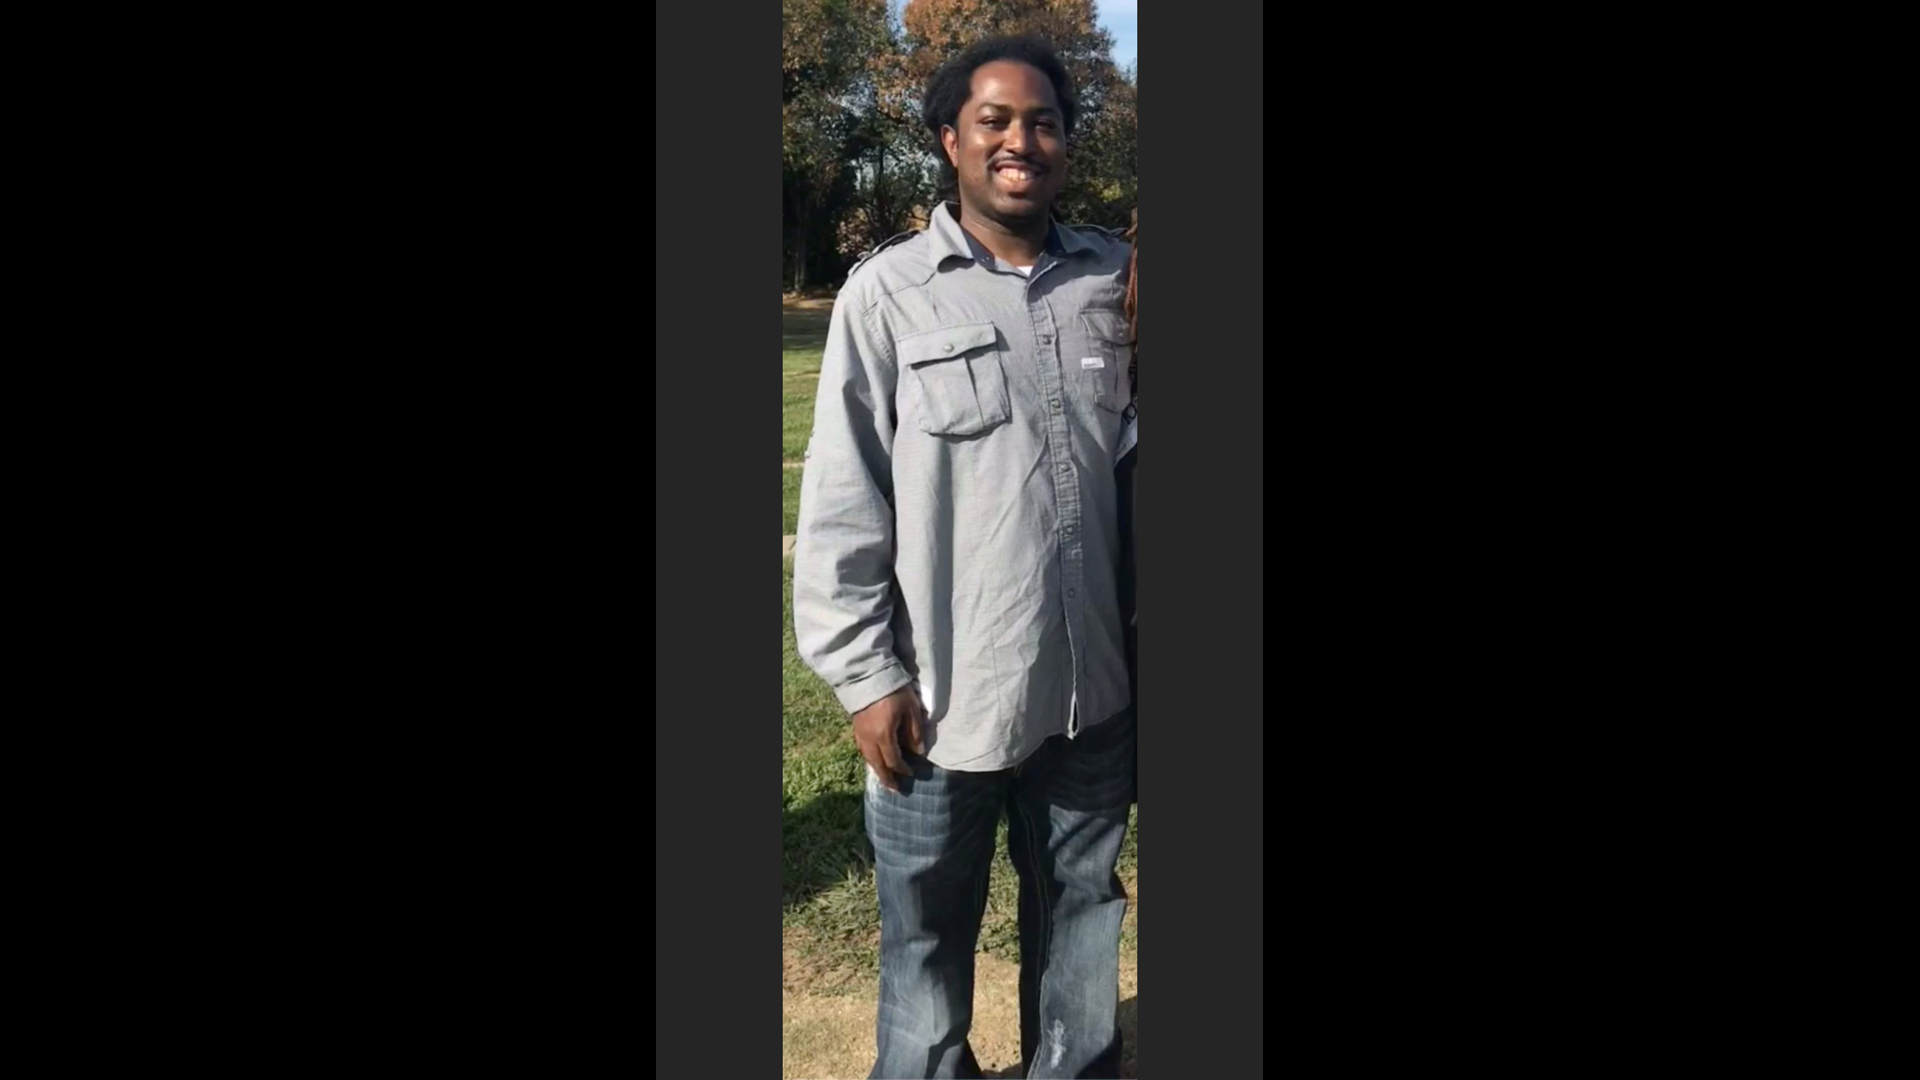 Antonio Thomas, 39, was found unresponsive at Sacramento County Jail in December 2019.